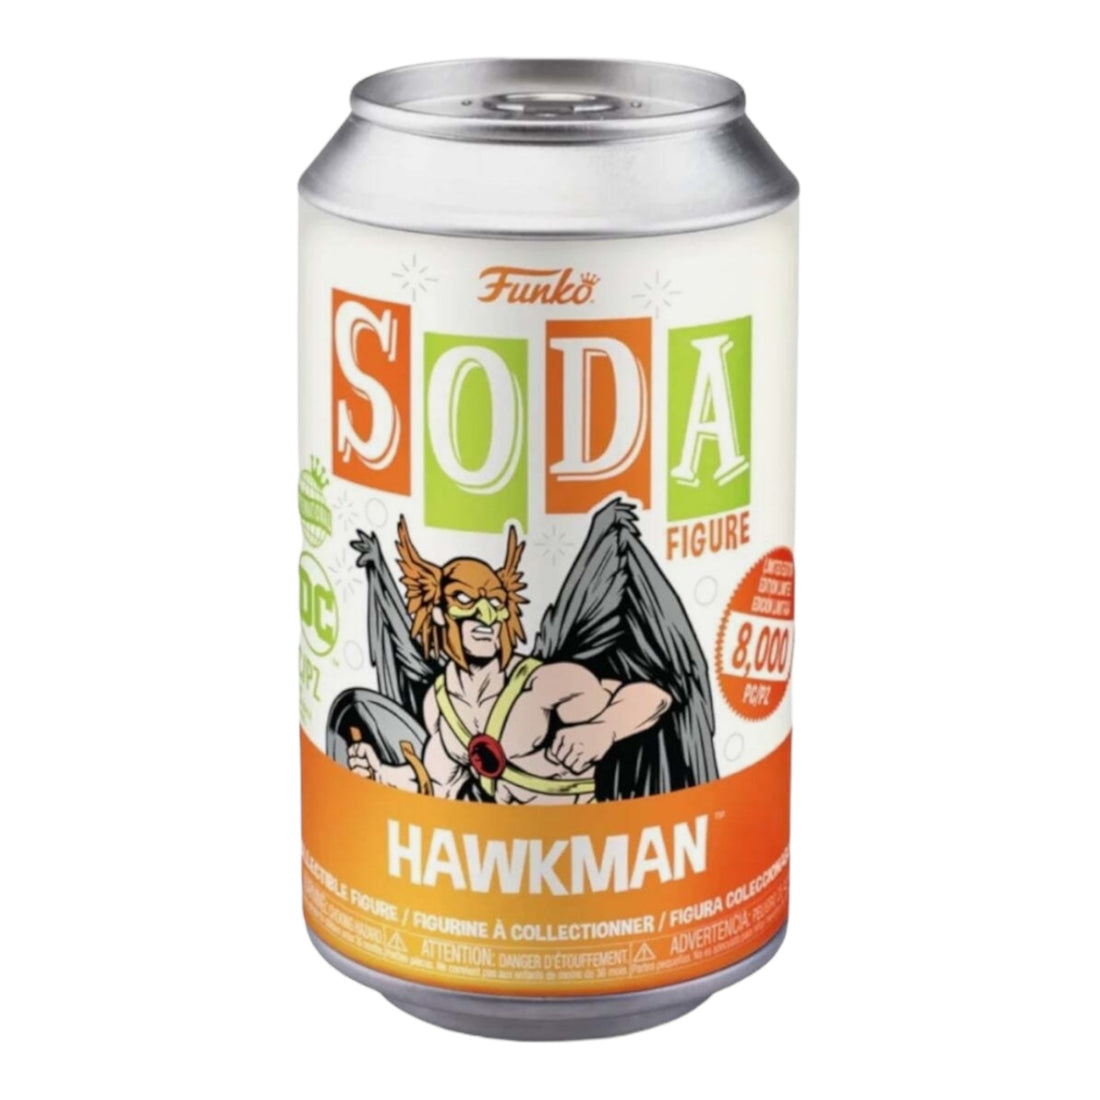 Funko Soda Hawkman Chance Of Chase Figure